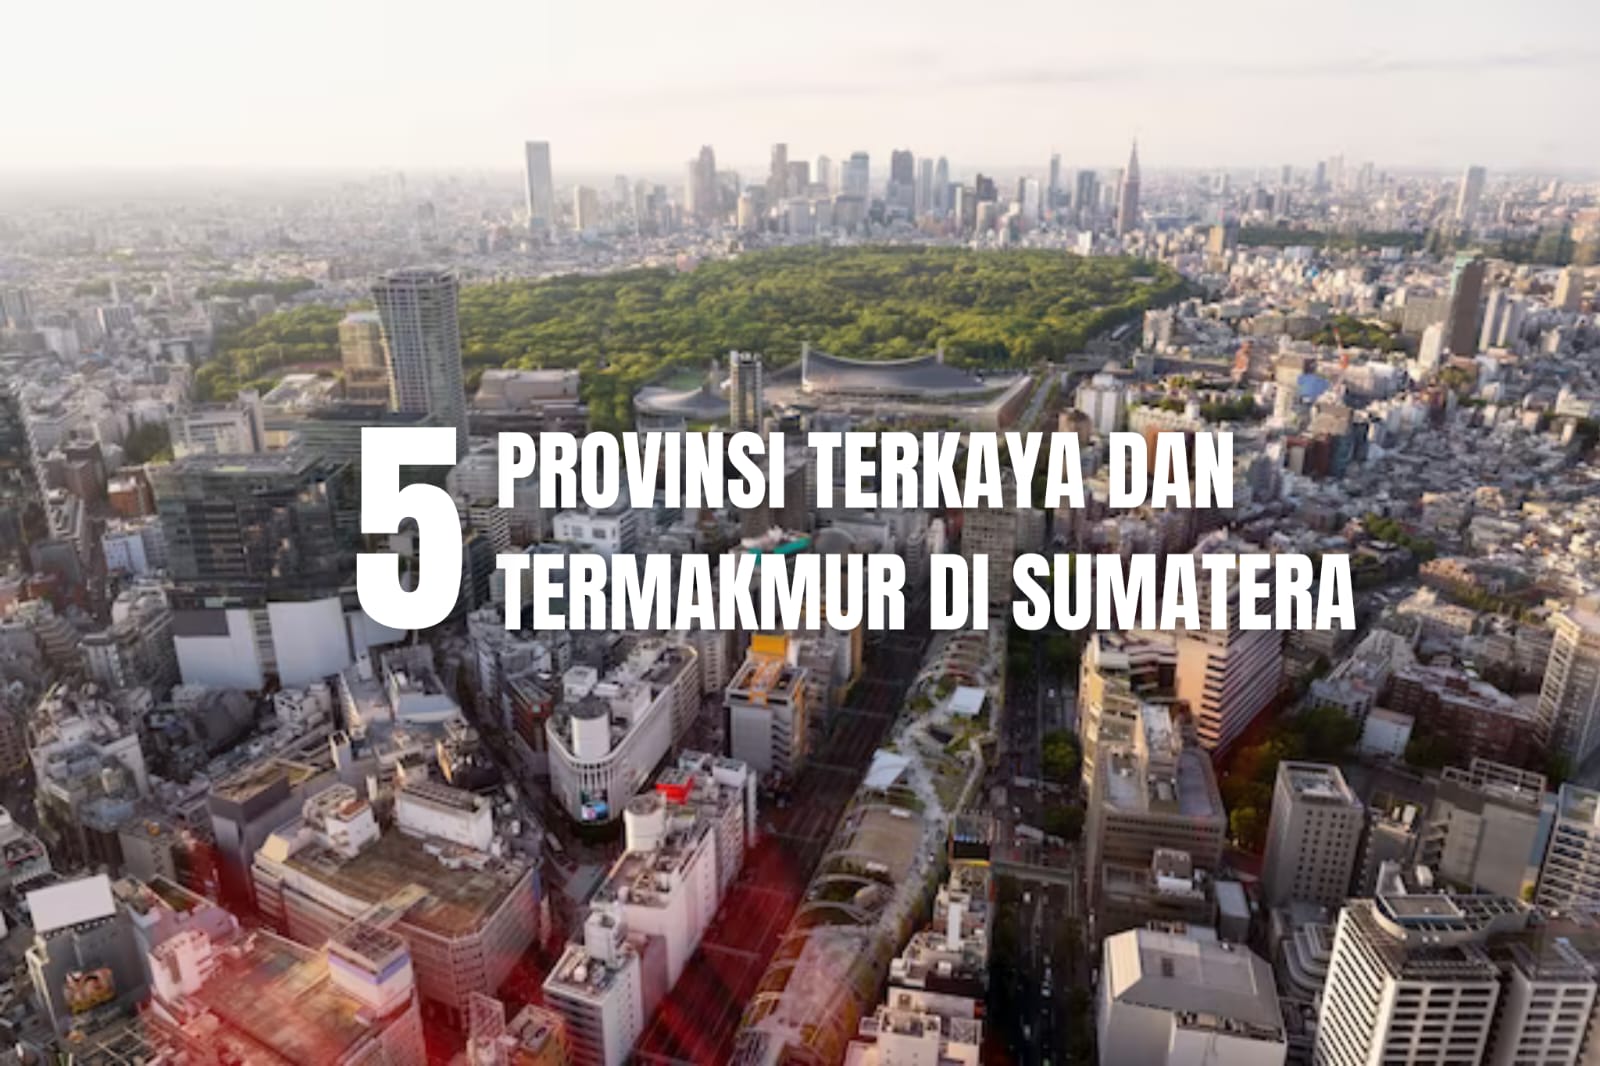 5 Provinsi Terkaya dan Termakmur di Sumatera, Ada Provinsi Baru?